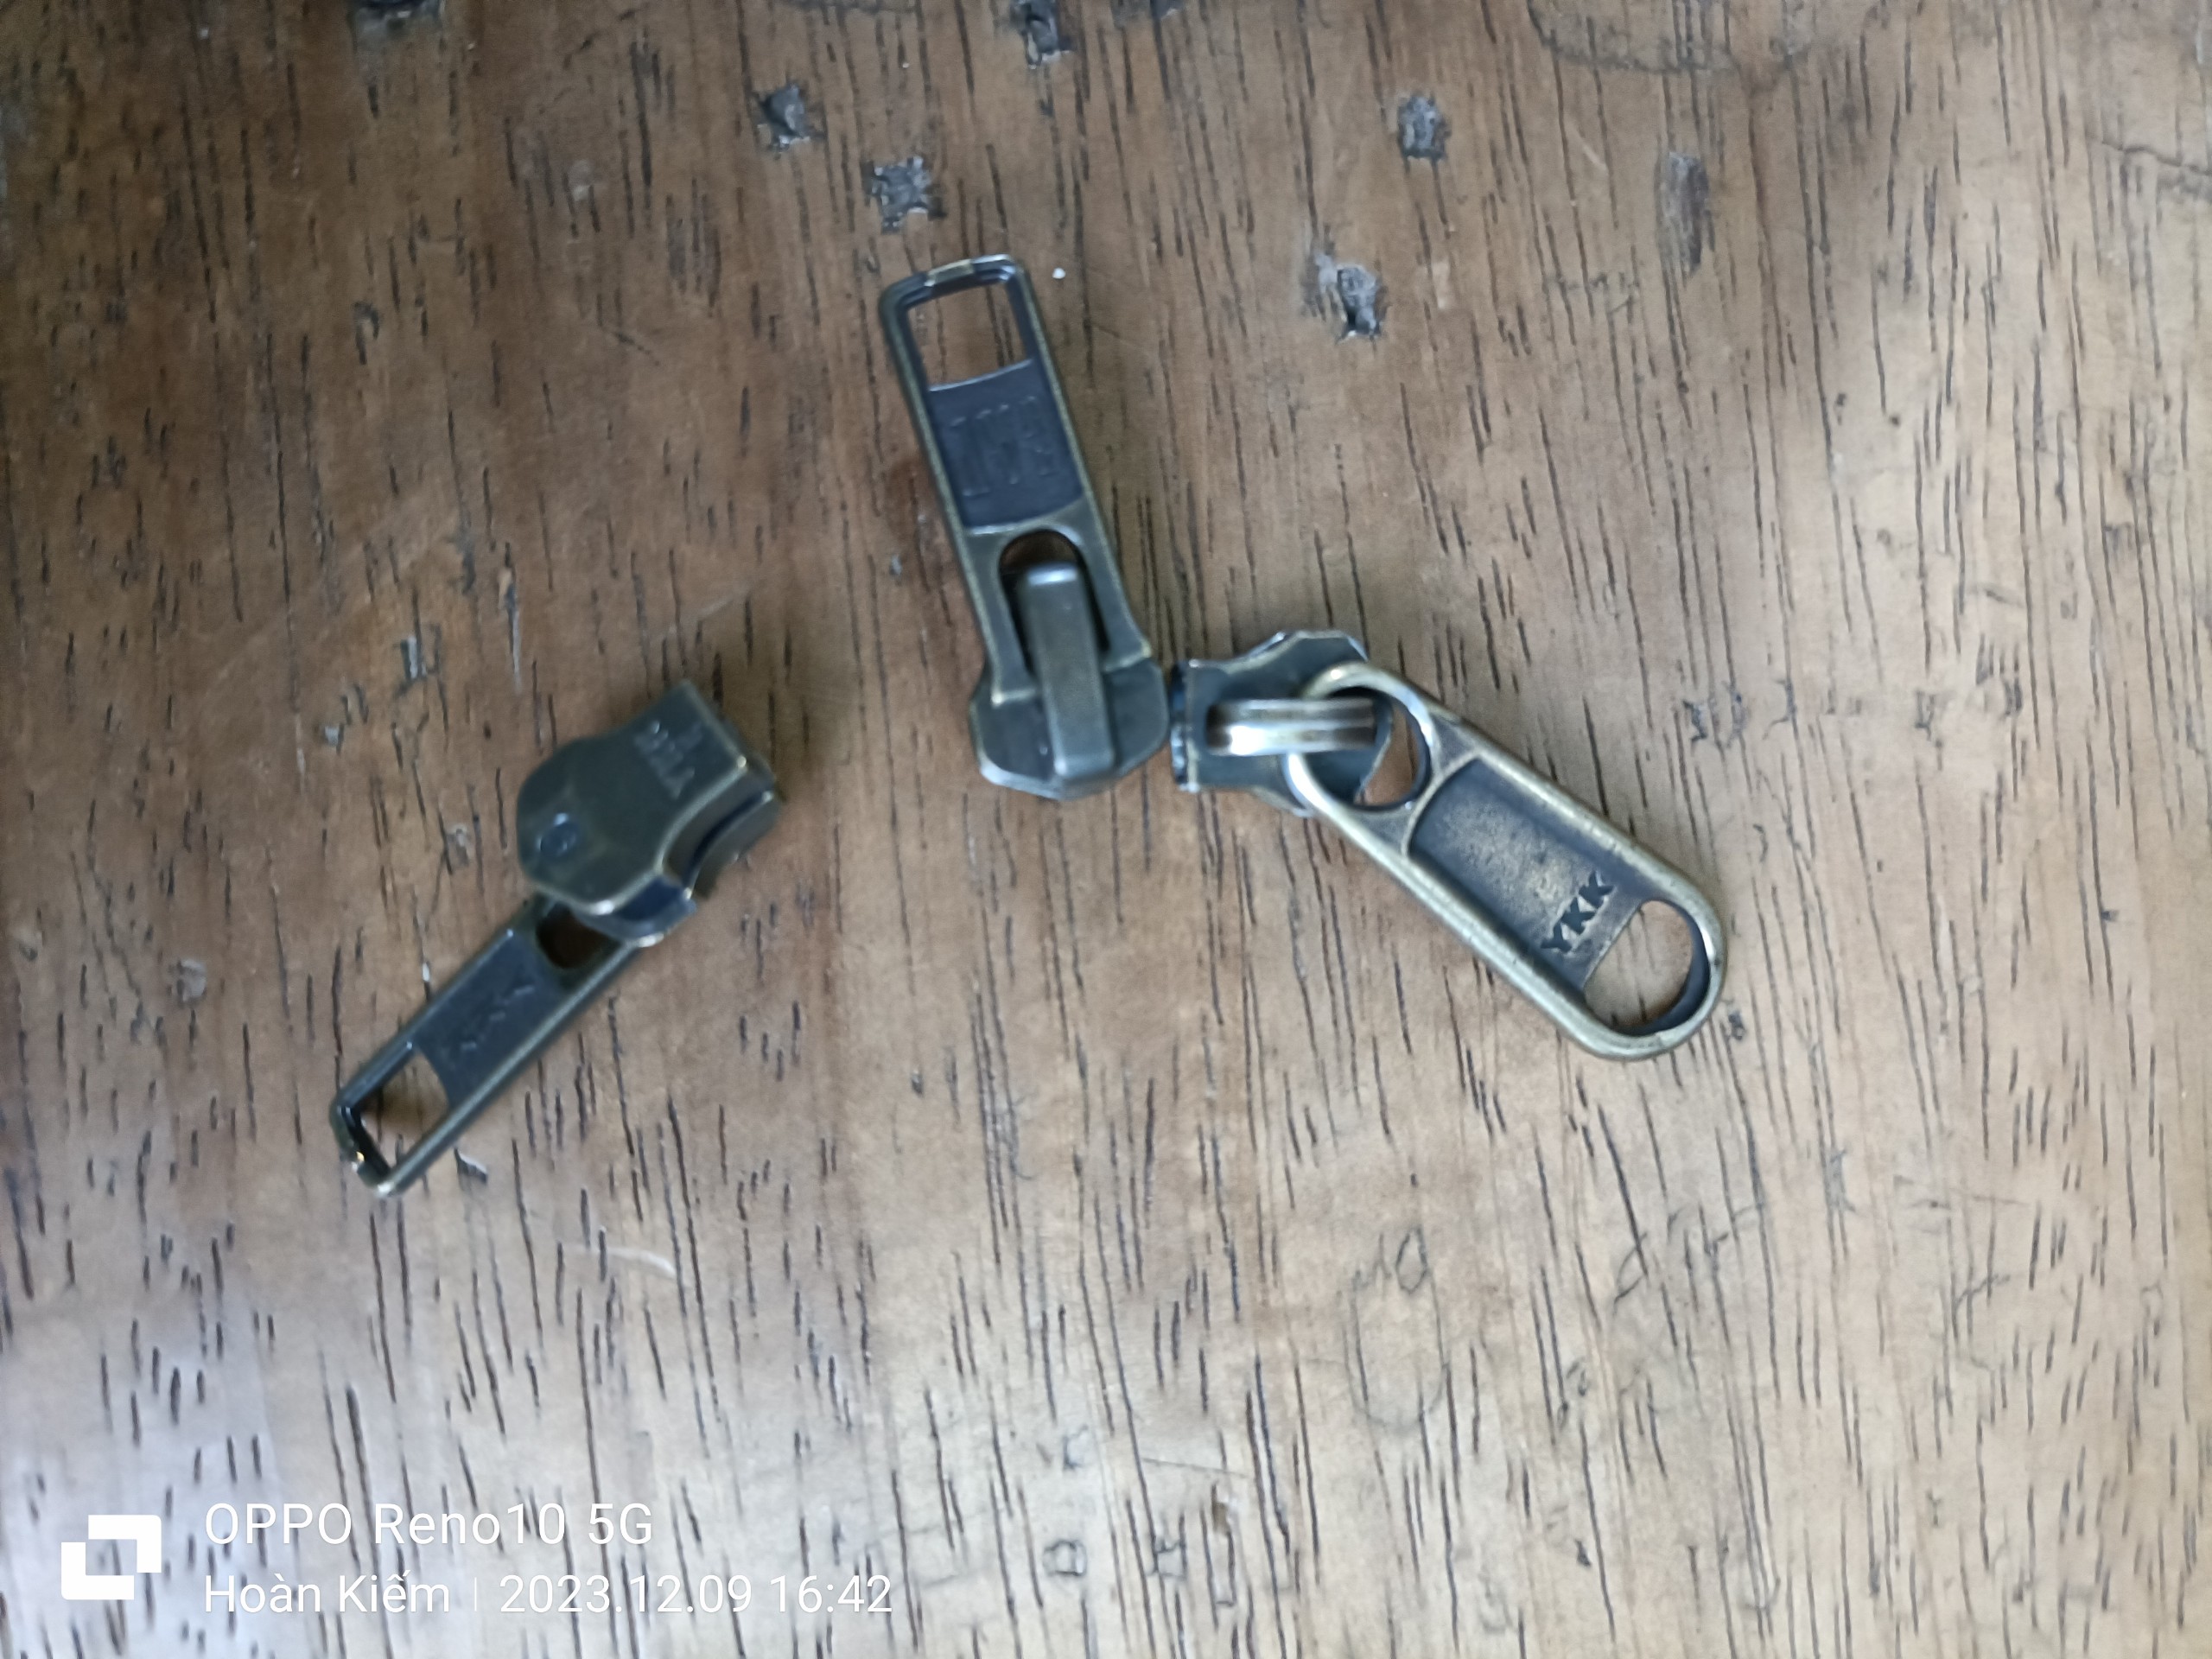 Zipper repair